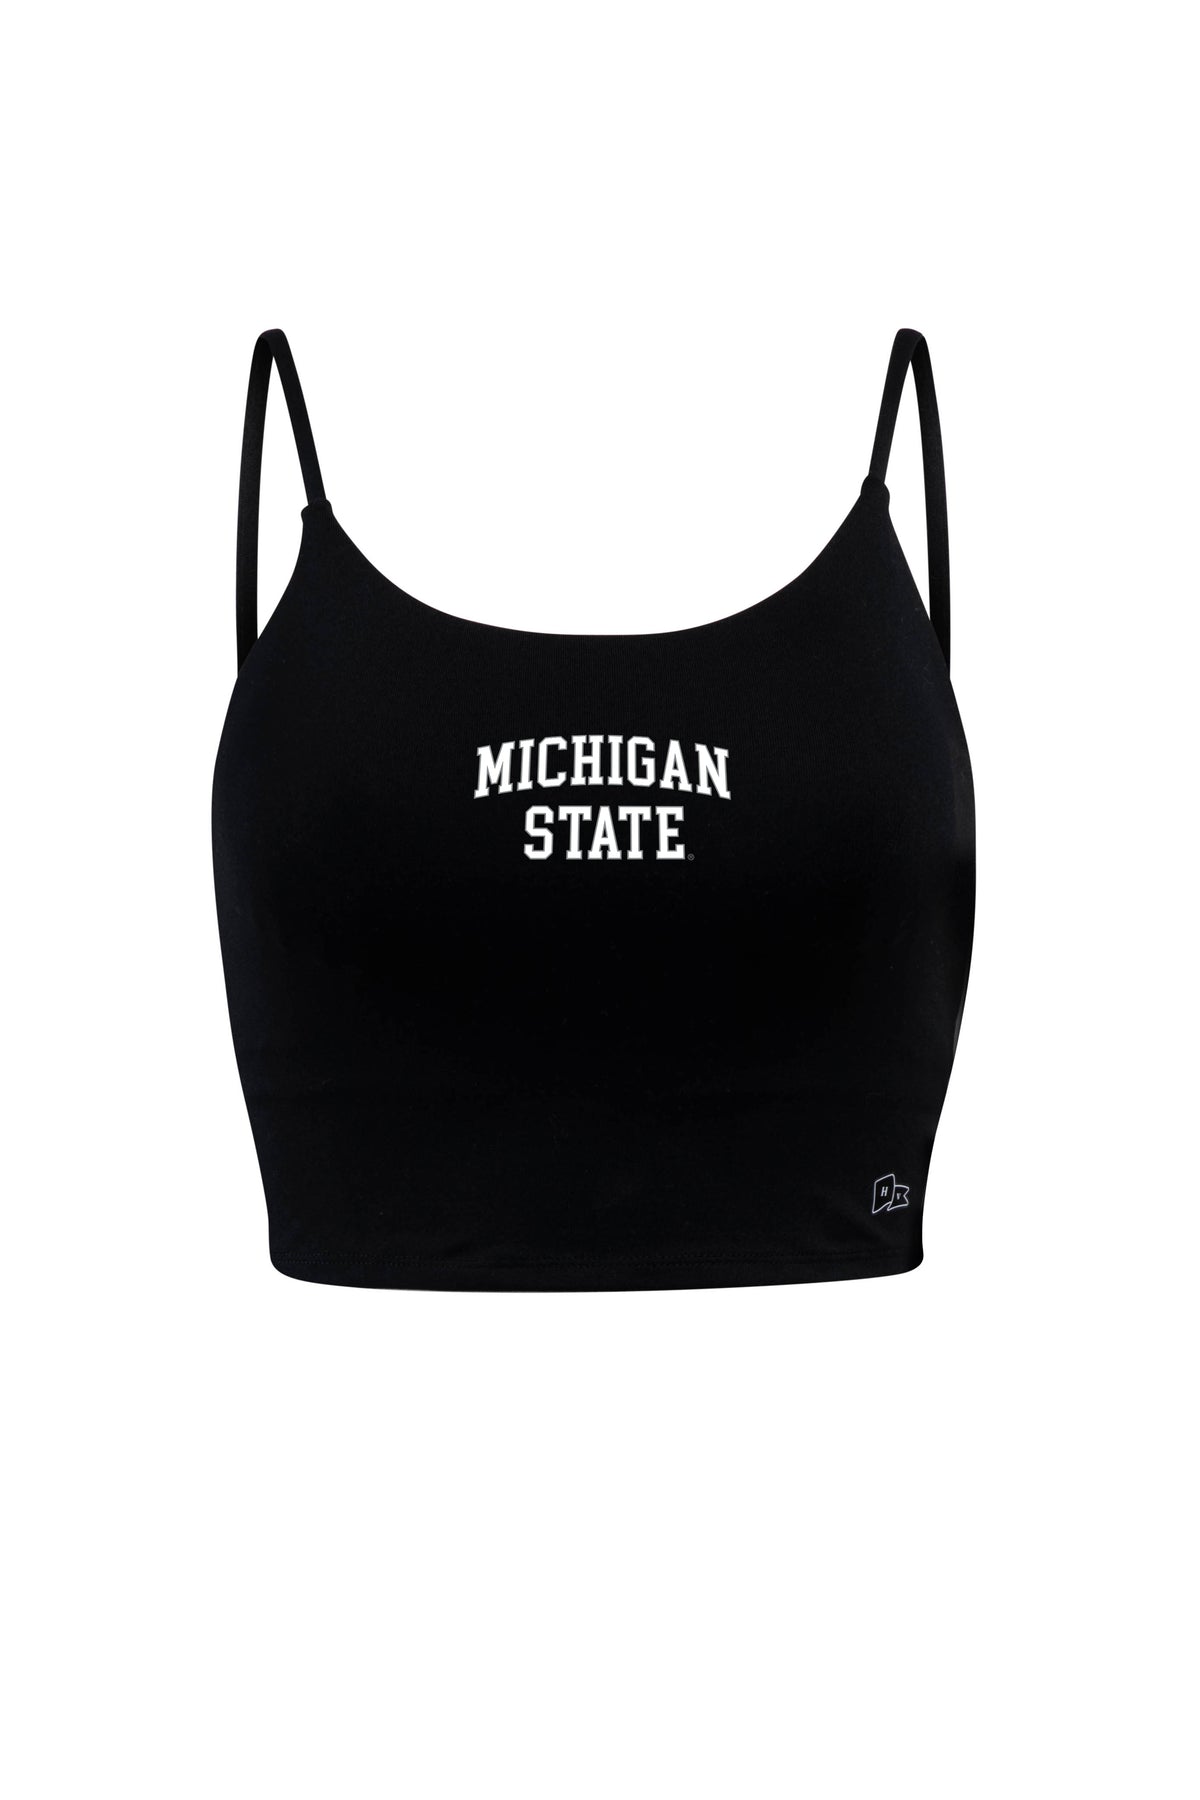 Michigan State University Bra Tank Top